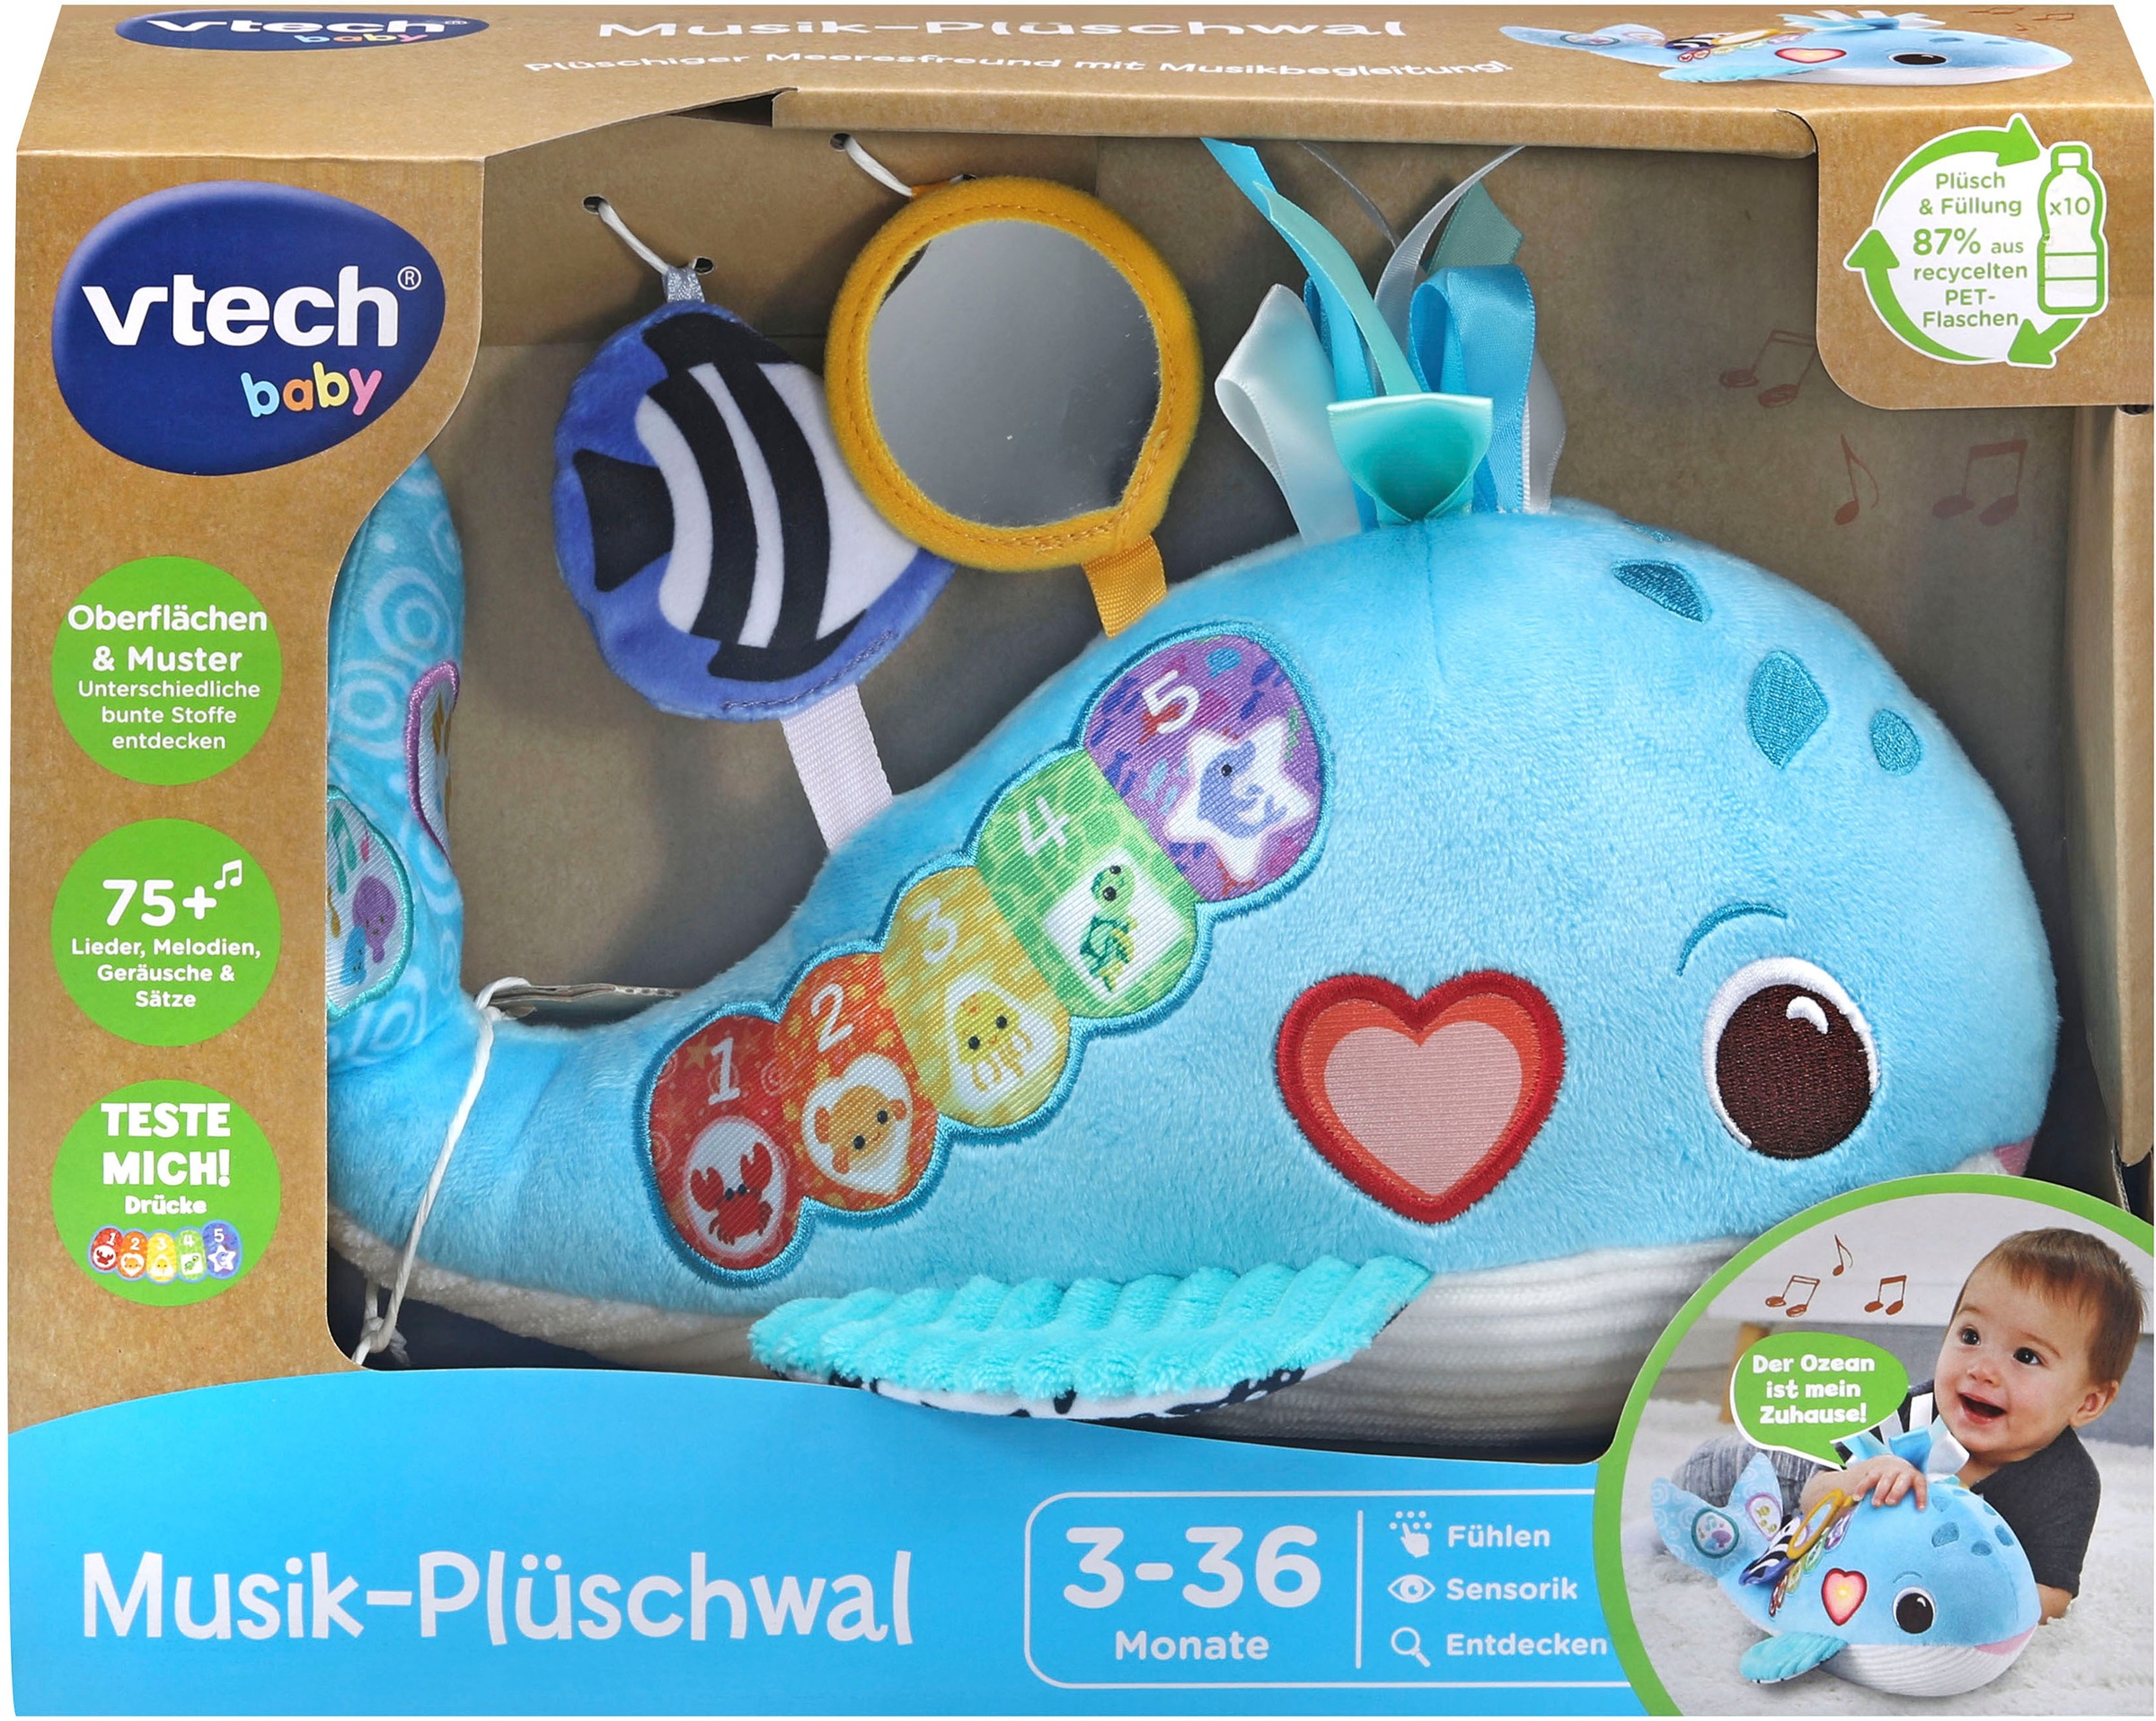 Vtech® Plüschfigur »Vtech Baby, Musik-Plüschwal«, aus recyceltem Material